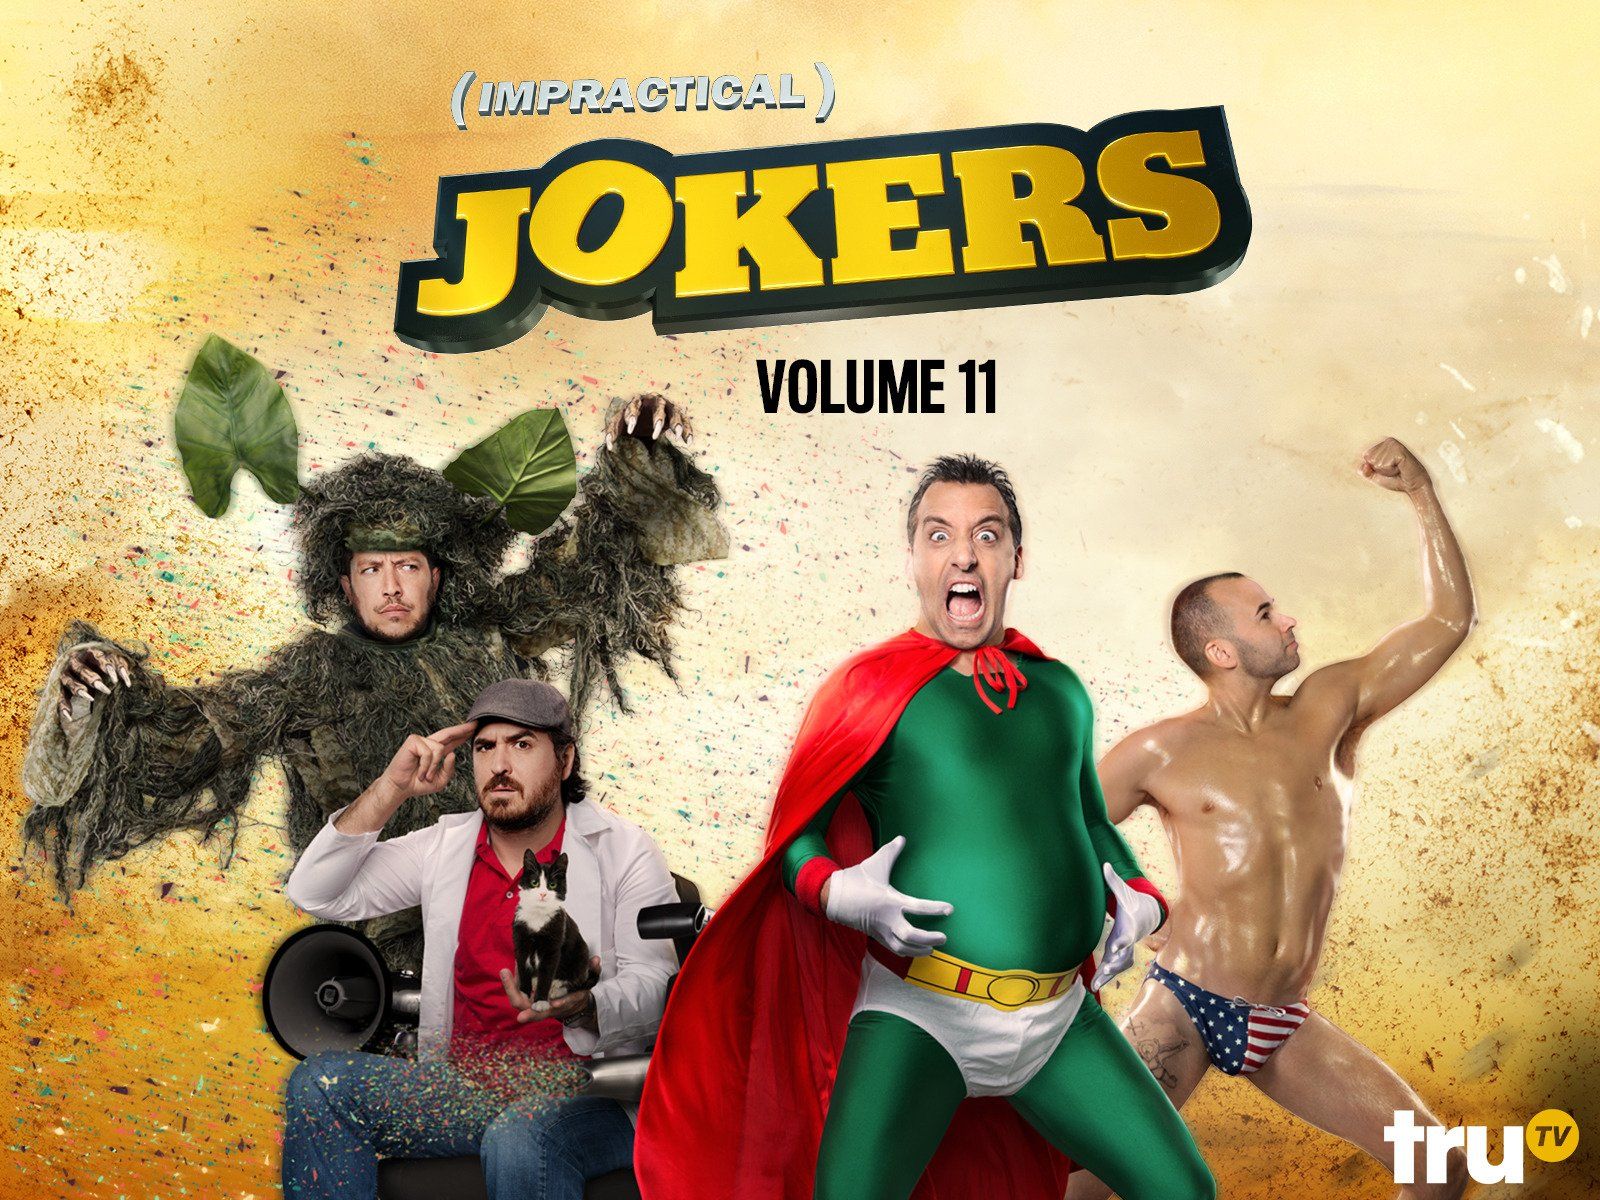 Watch Impractical Jokers Season 15